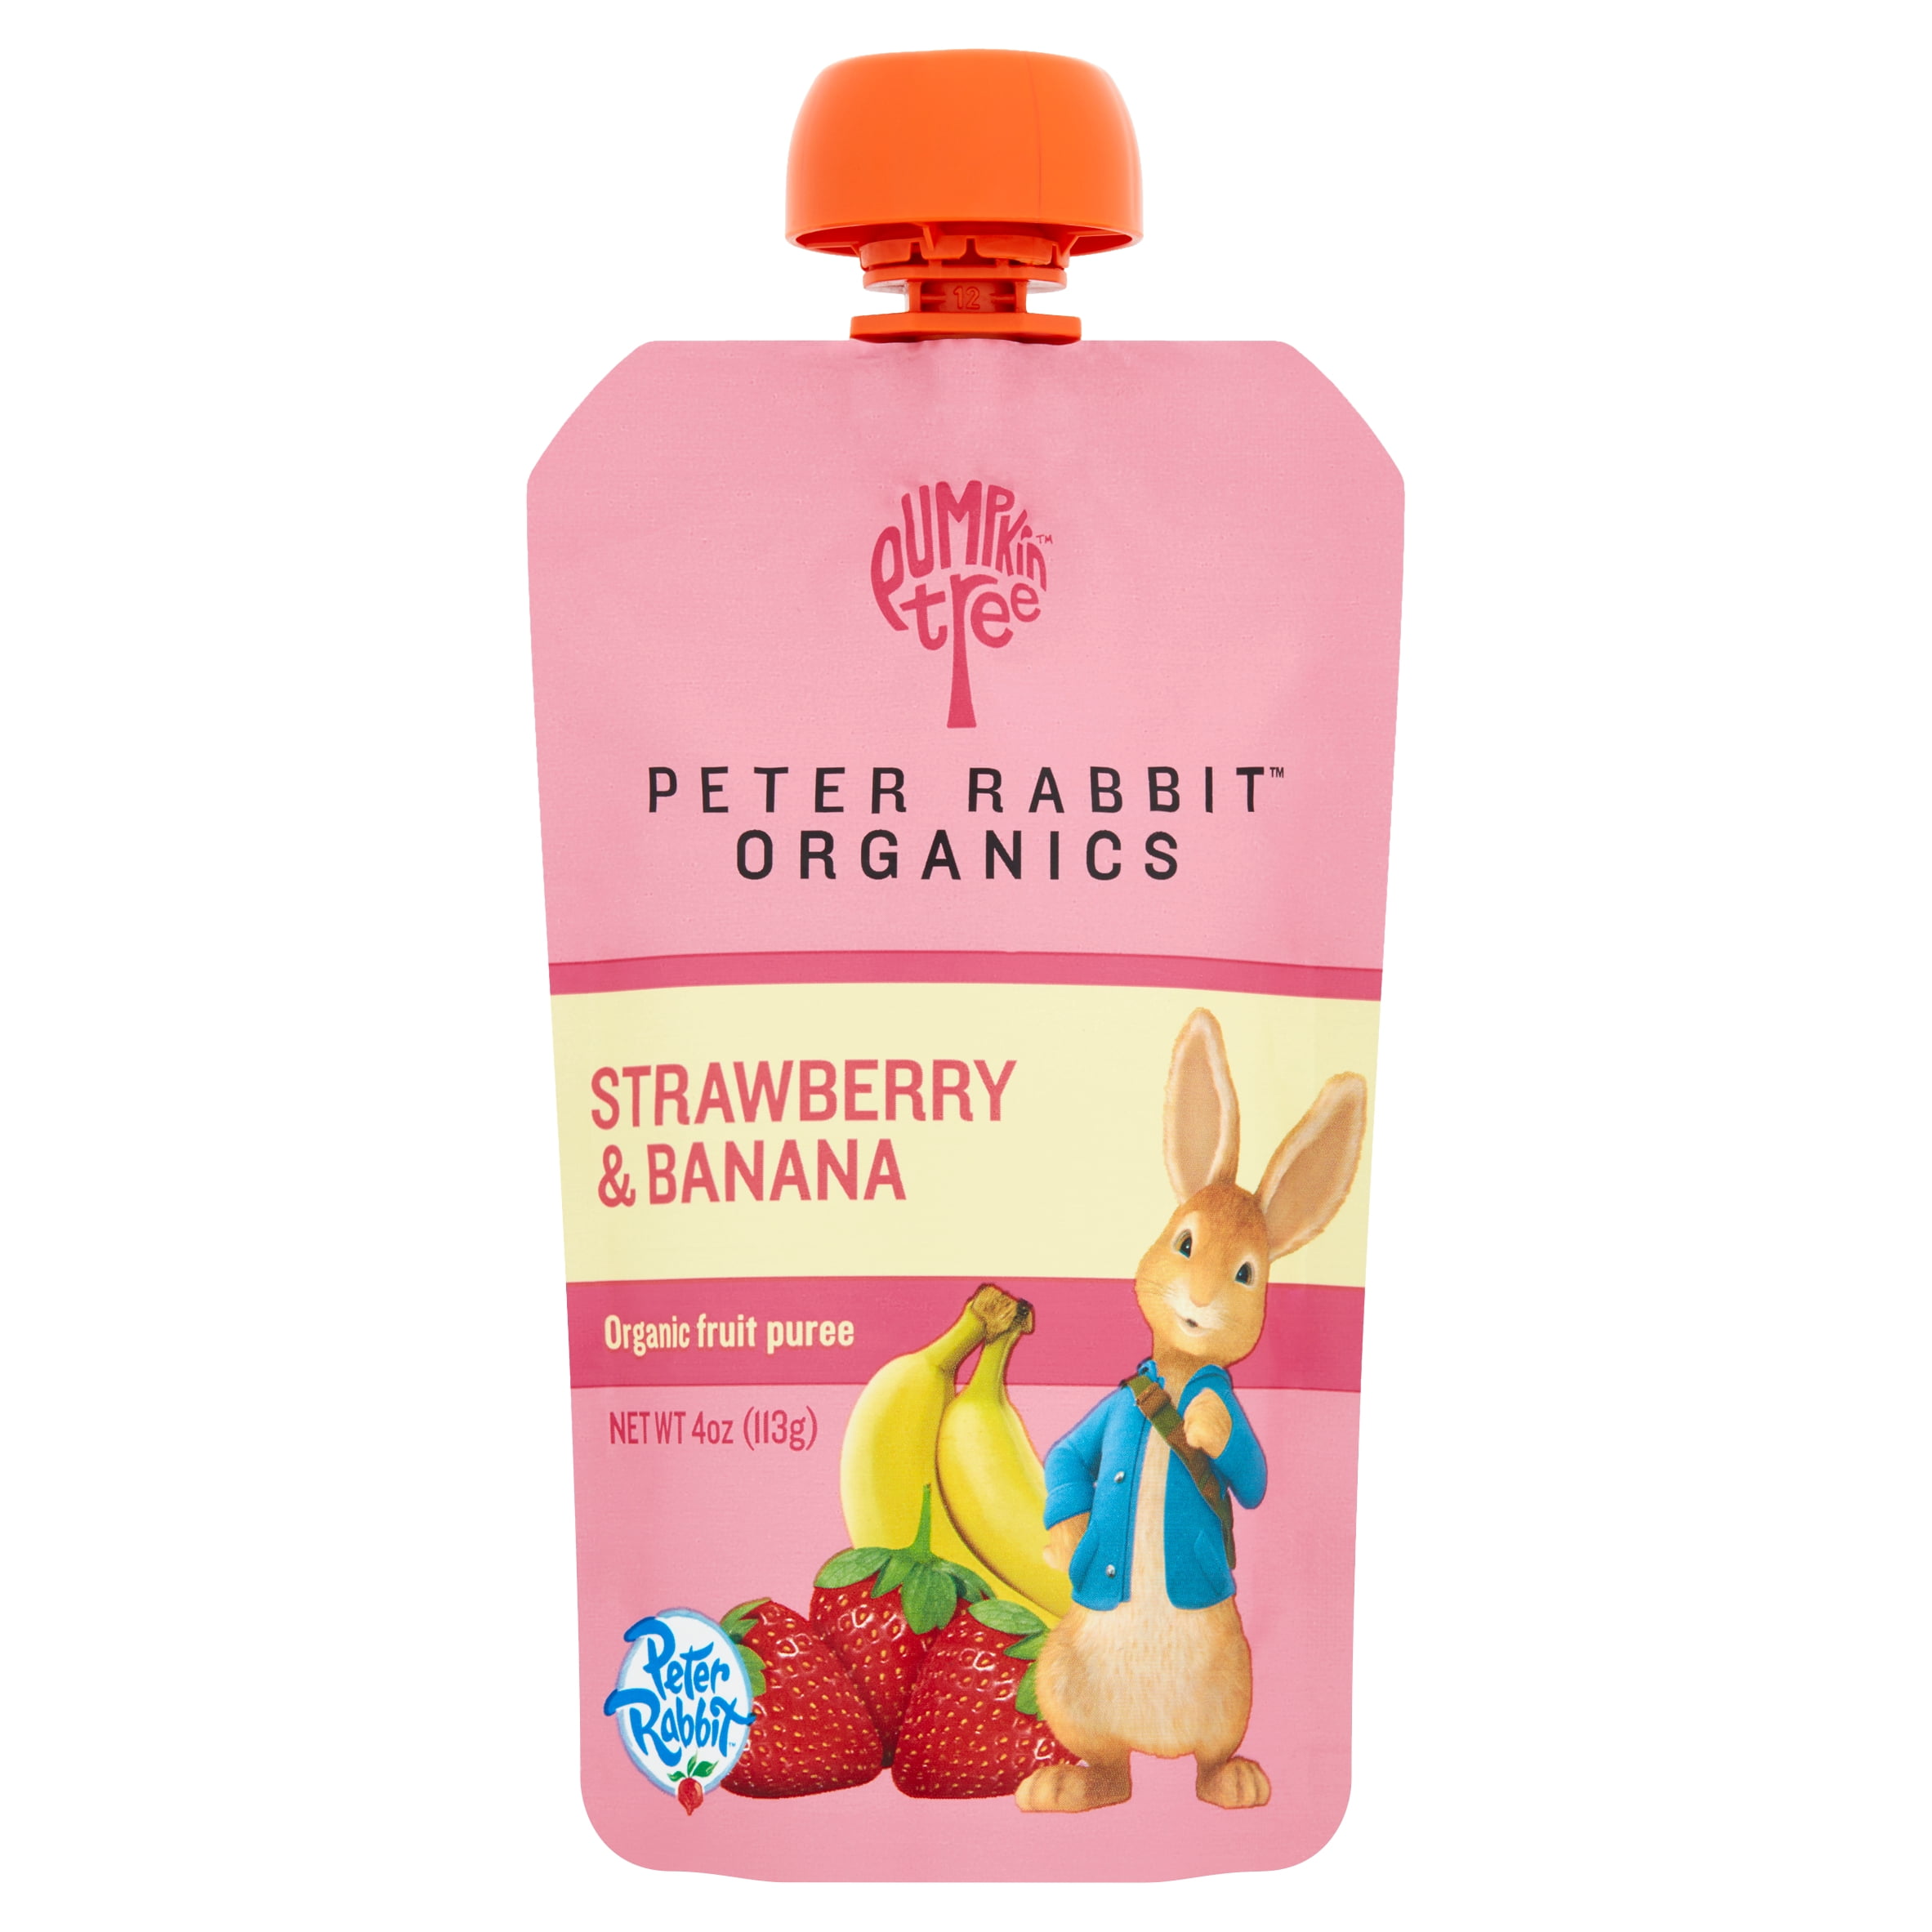 Peter Rabbit Organics Strawberry & Banana Organic Fruit Puree, 4 oz